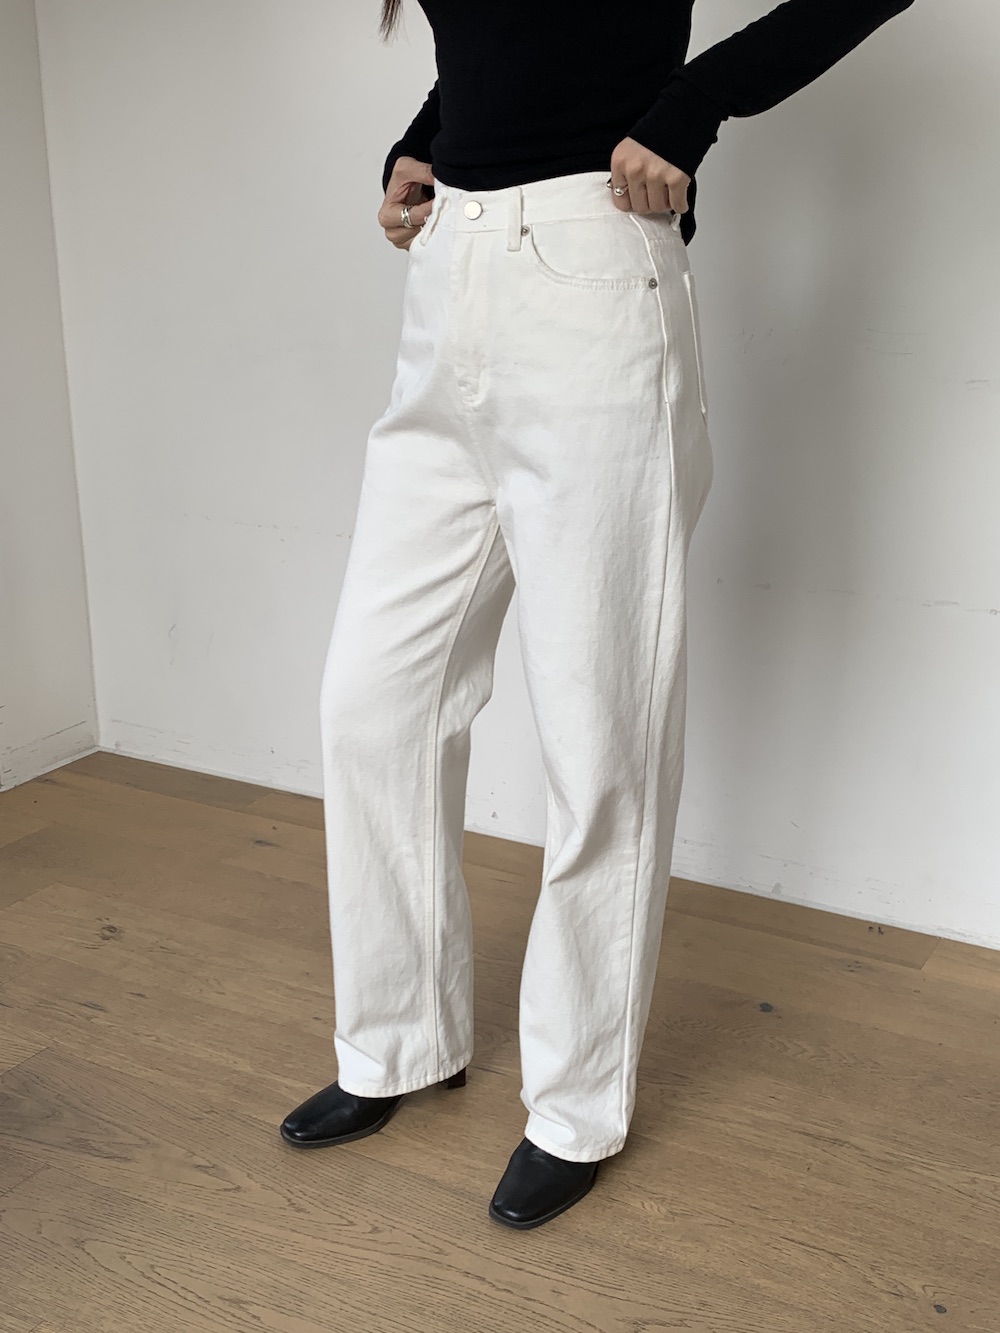 Port white pants (s,m)